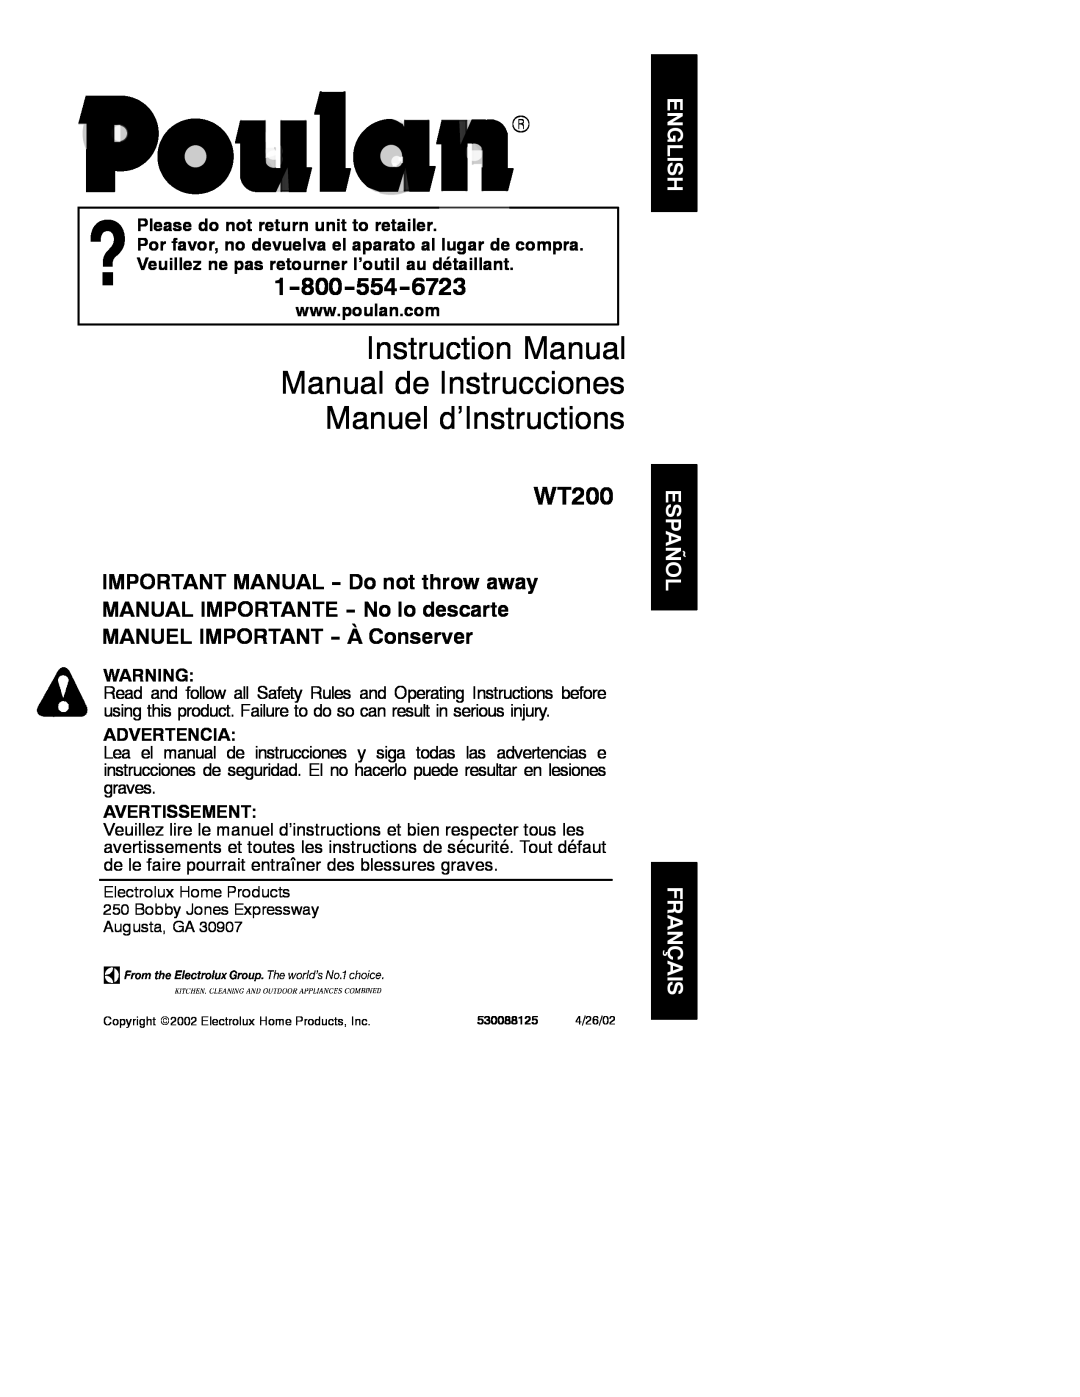 Poulan 530088125 instruction manual WT200, Please do not return unit to retailer, Advertencia, Avertissement 